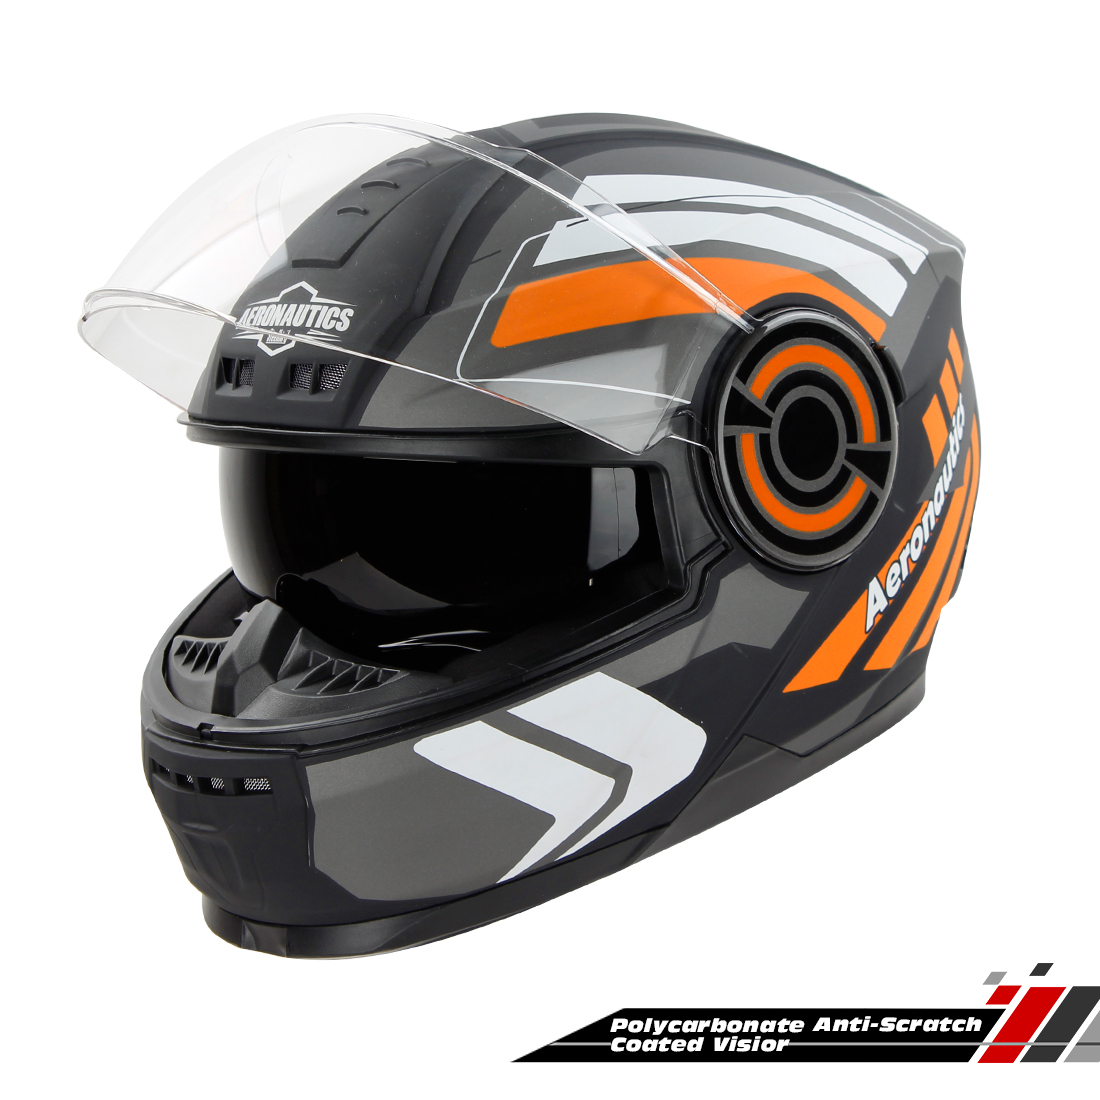 Steelbird SBH-40 Vanguard ISI Certified Full Face Graphic Helmet For Men And Women With Inner Sun Shield (Glossy Black Orange)